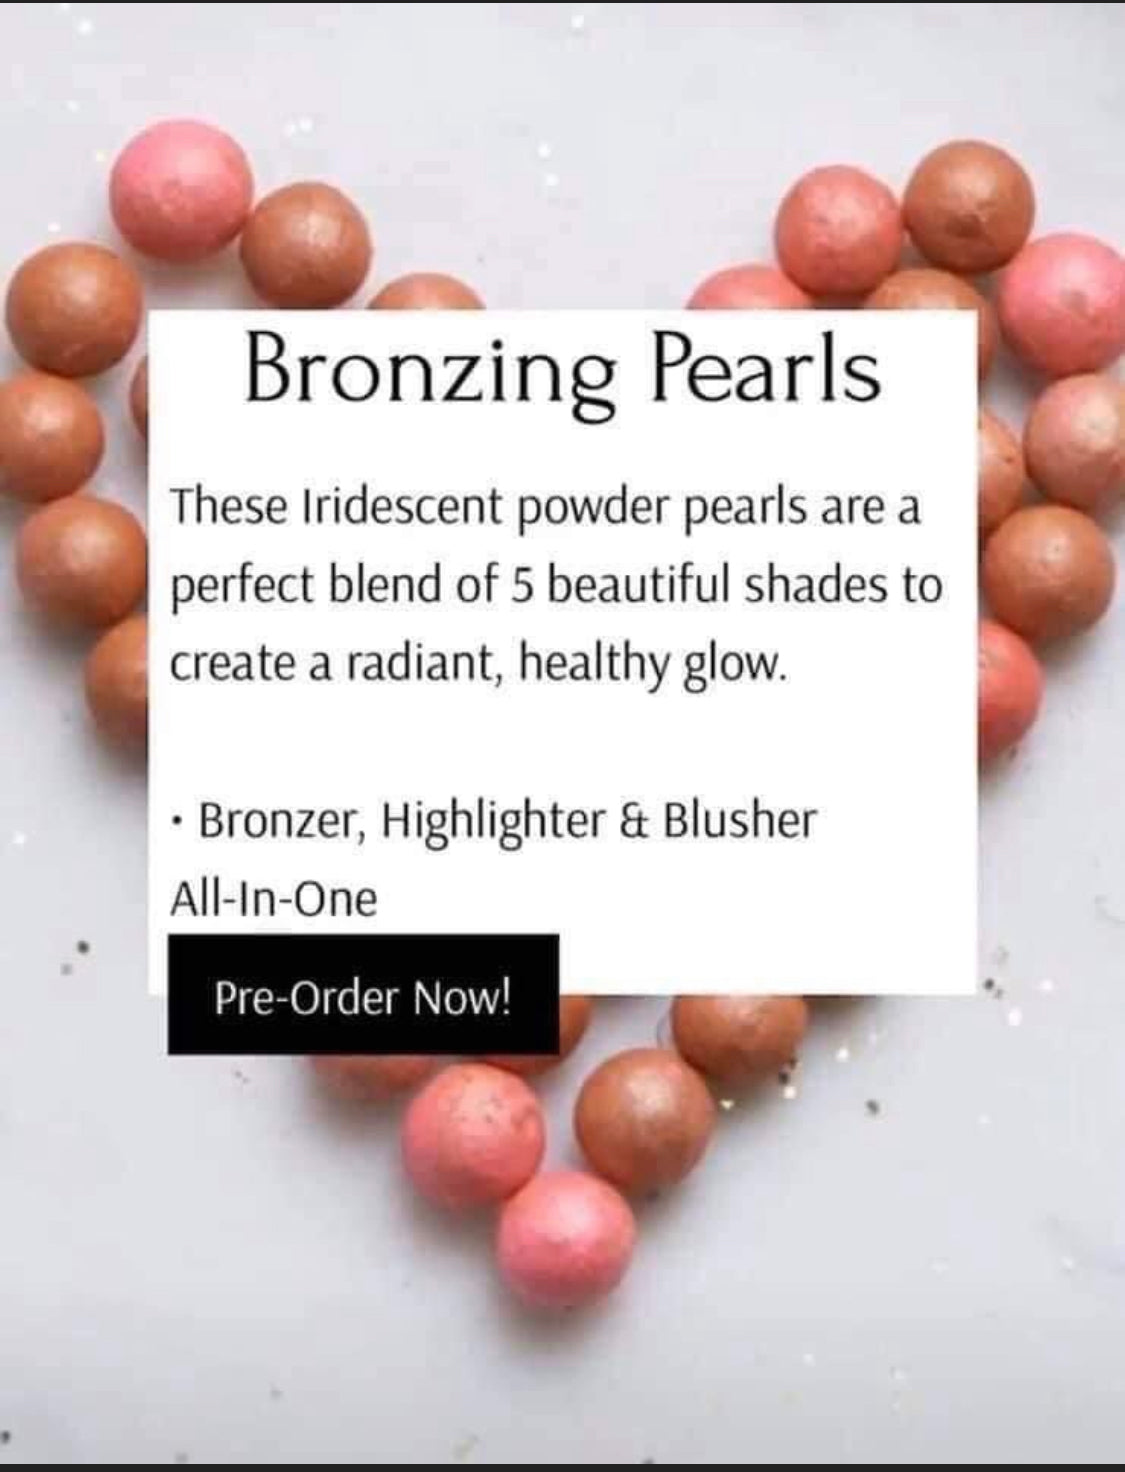 Bronzing Pearls - Batavia Beauty 